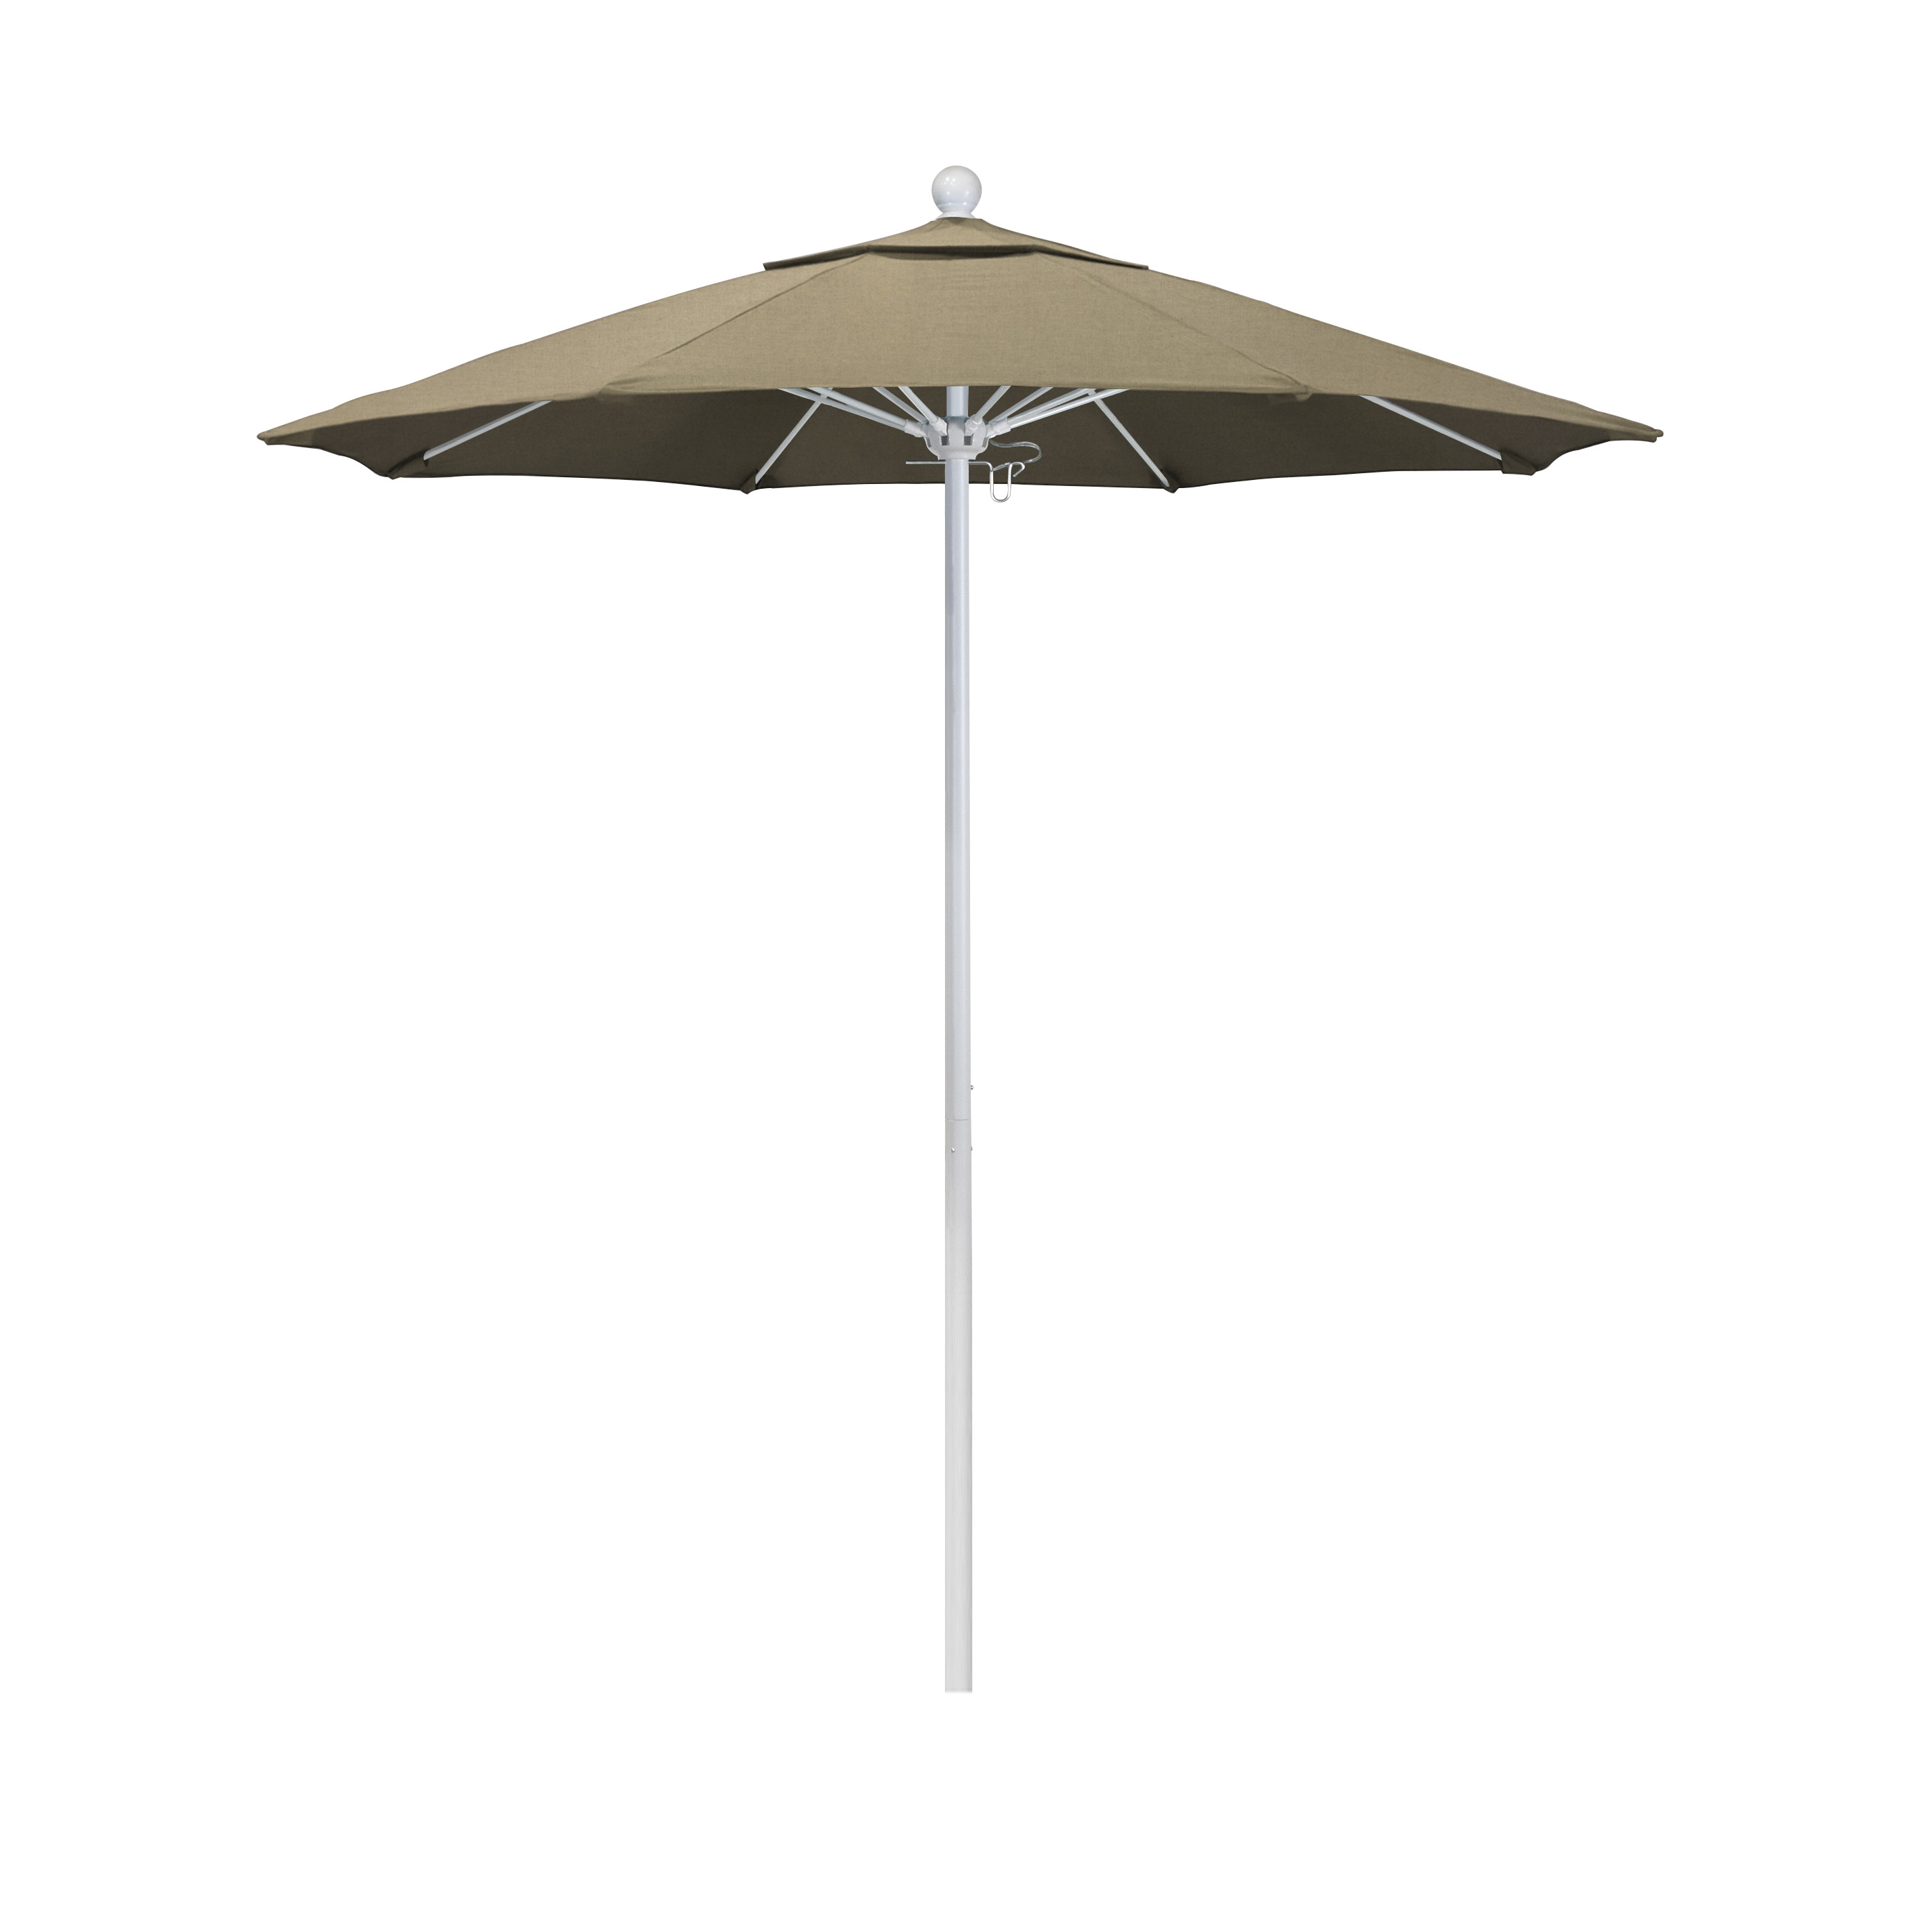 Alto758170-5476 7.5 Ft. Fiberglass Market Umbrella Pulley Open Mwhite-sunbrella-heather Beige